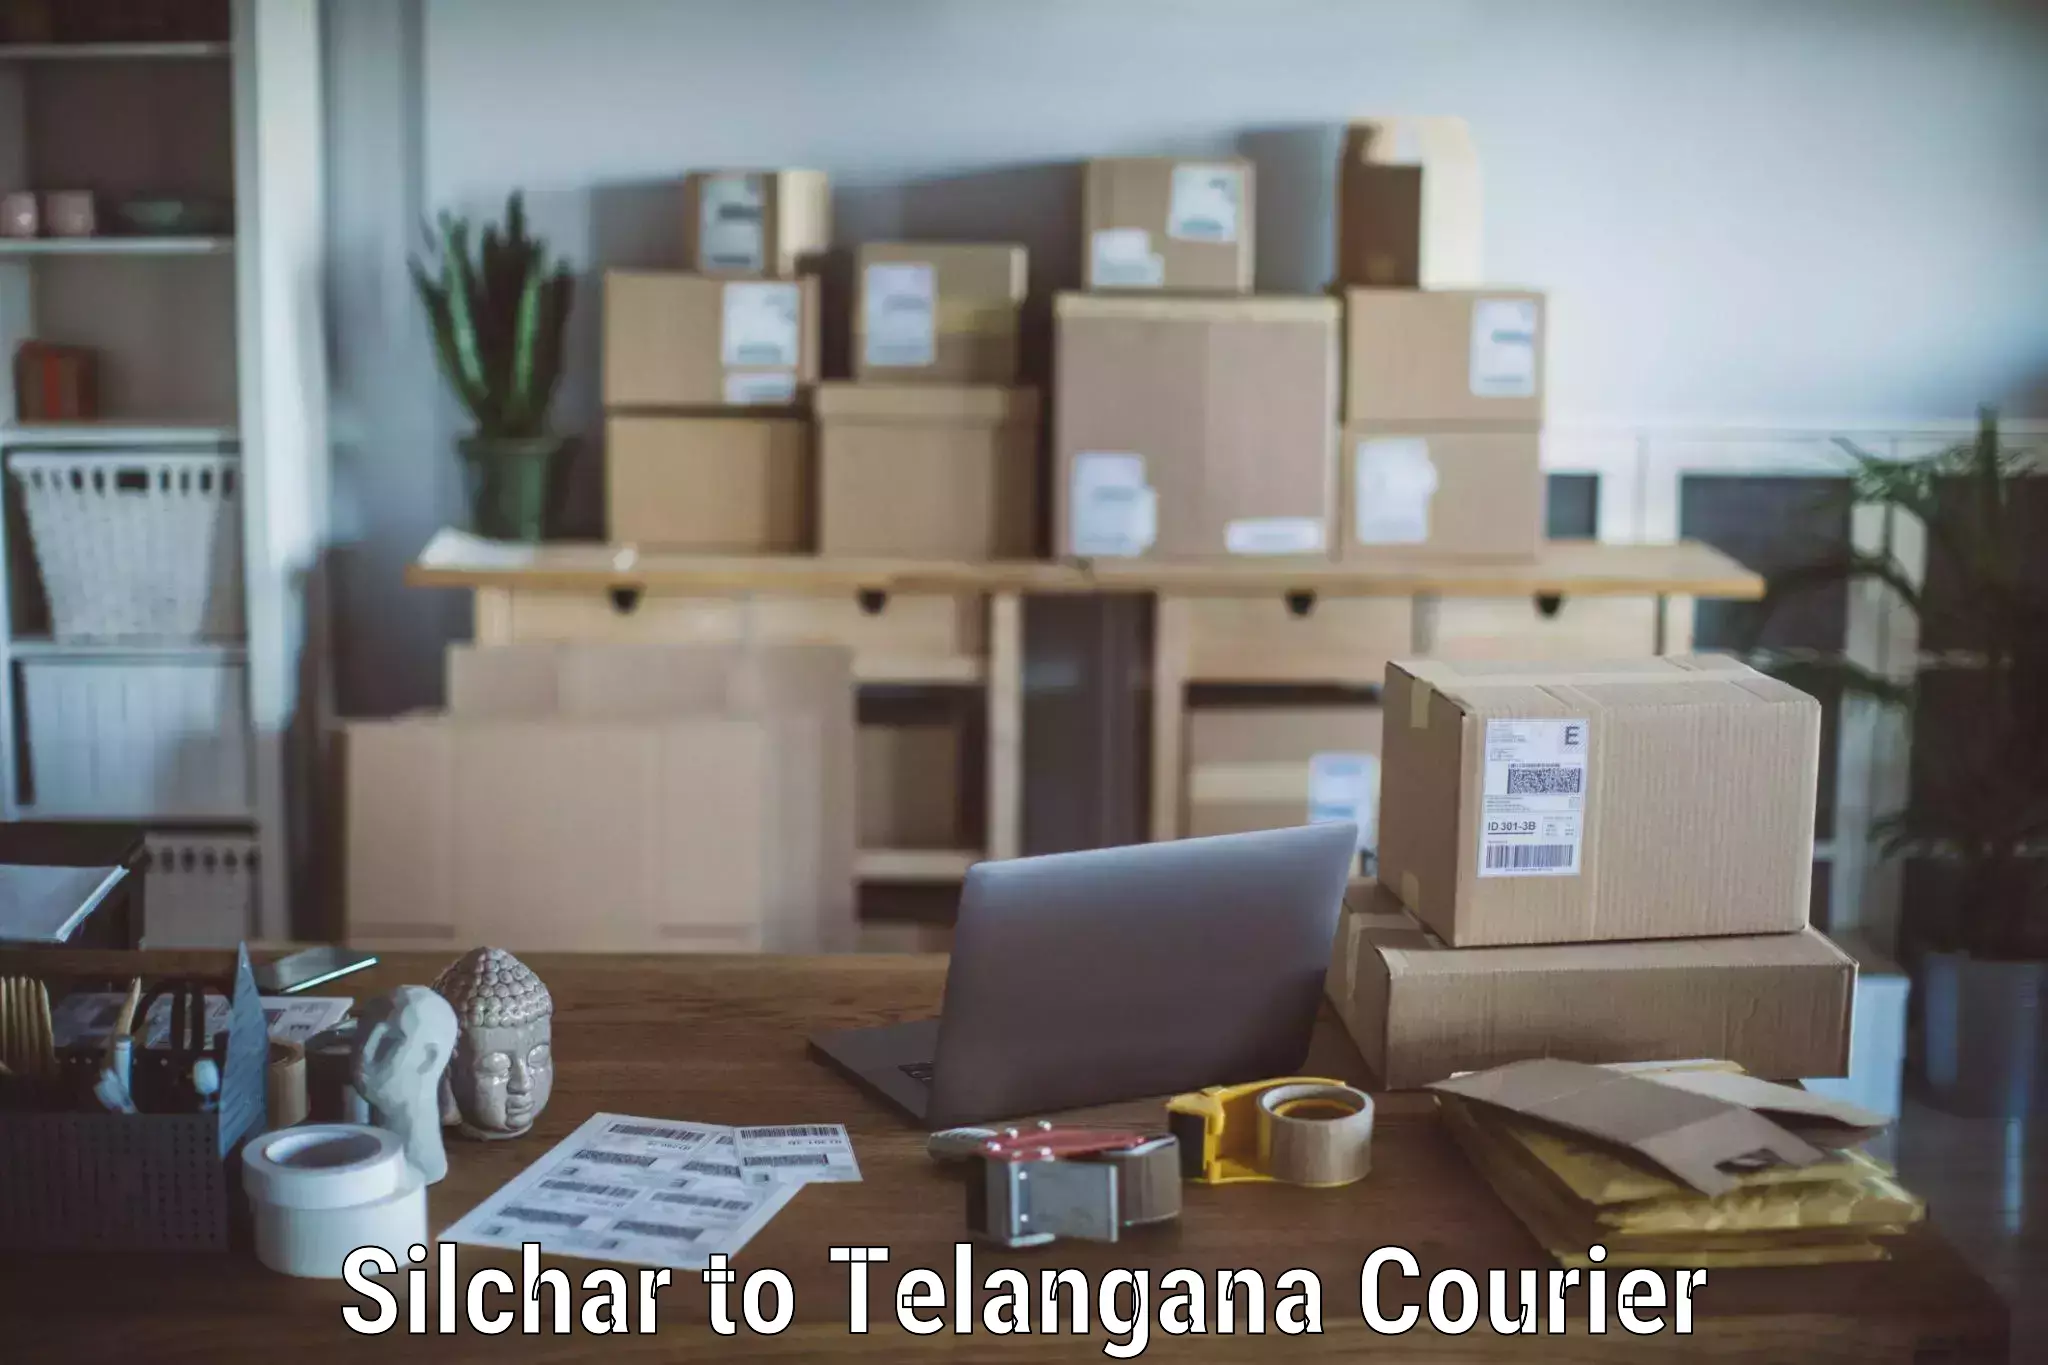 Efficient moving company Silchar to Mahabubnagar